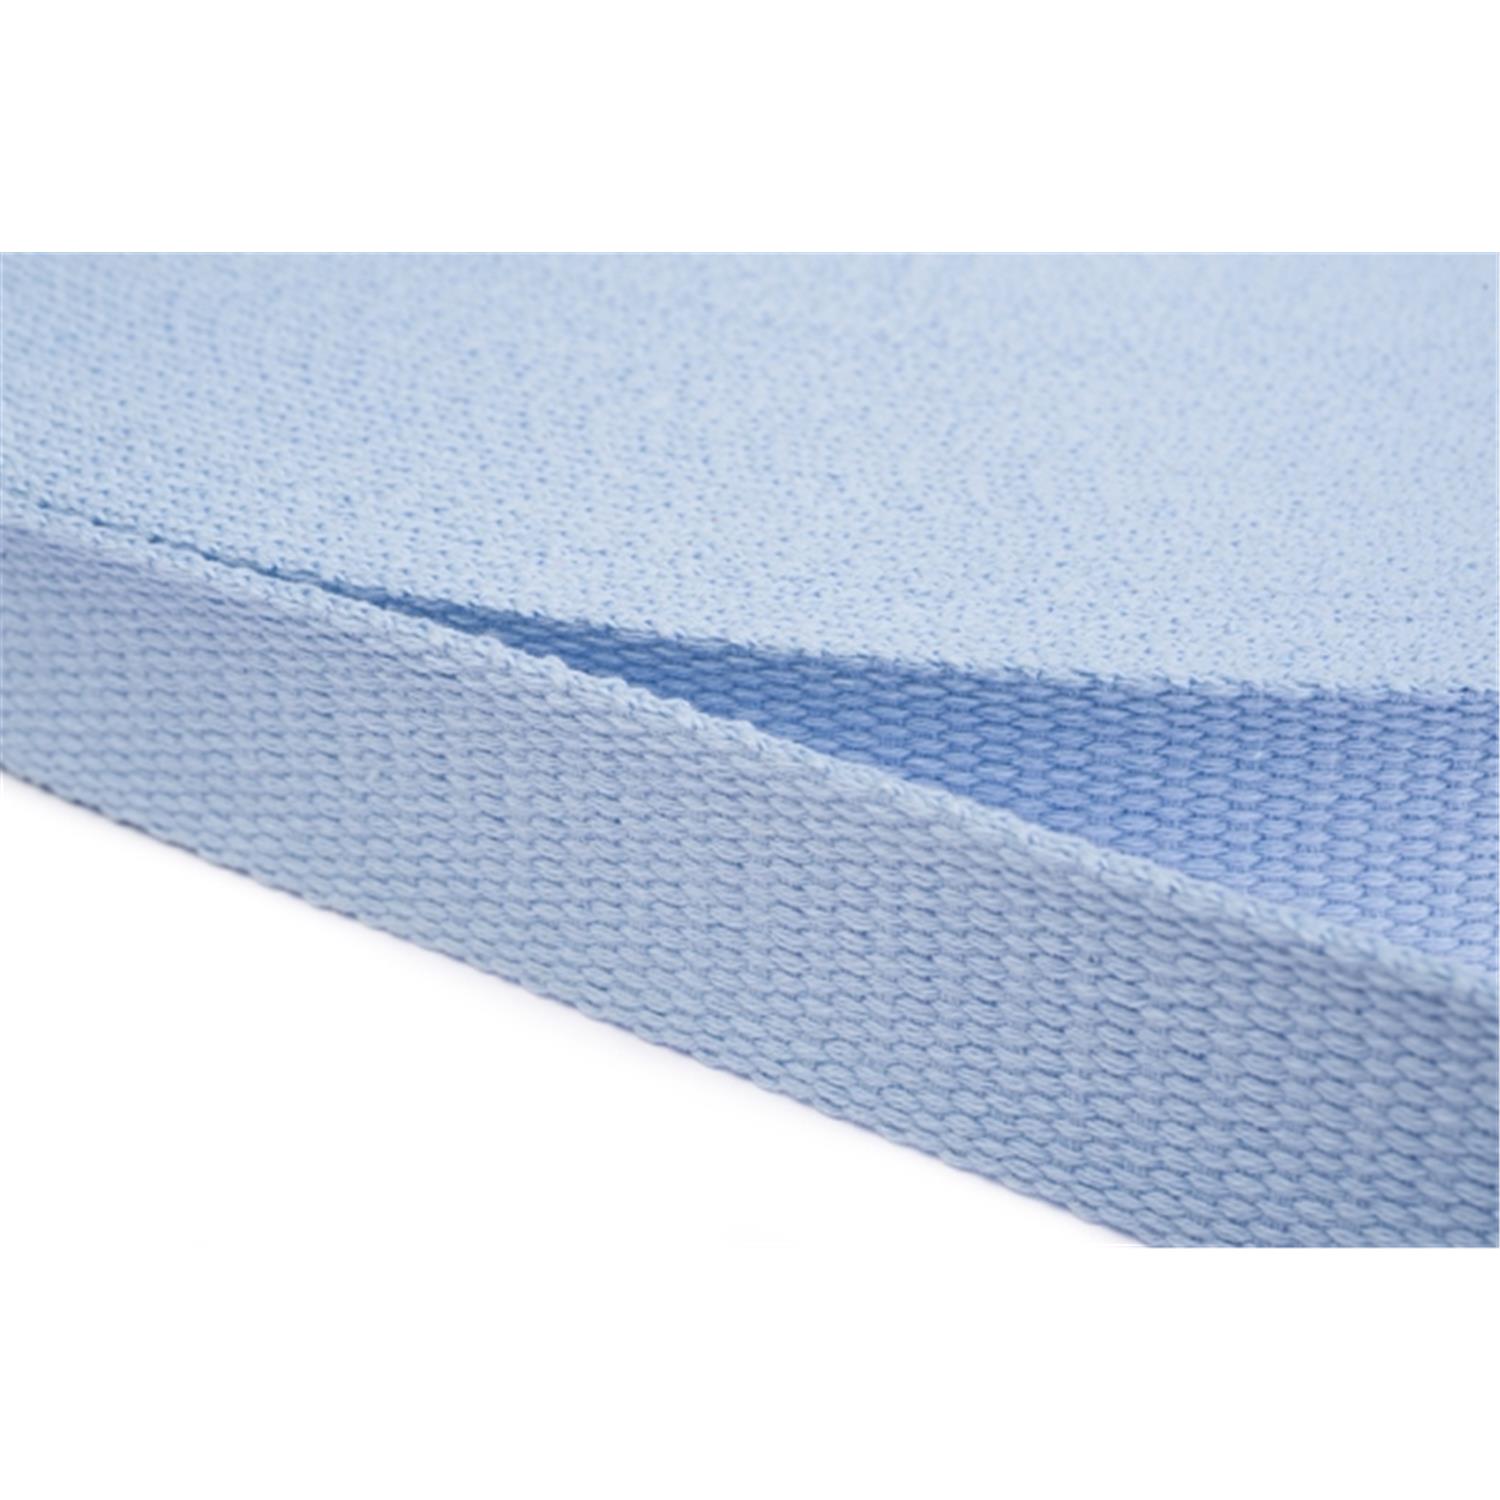 Gurtband aus Baumwolle 15mm in 20 Farben 11 - hellblau 6 Meter